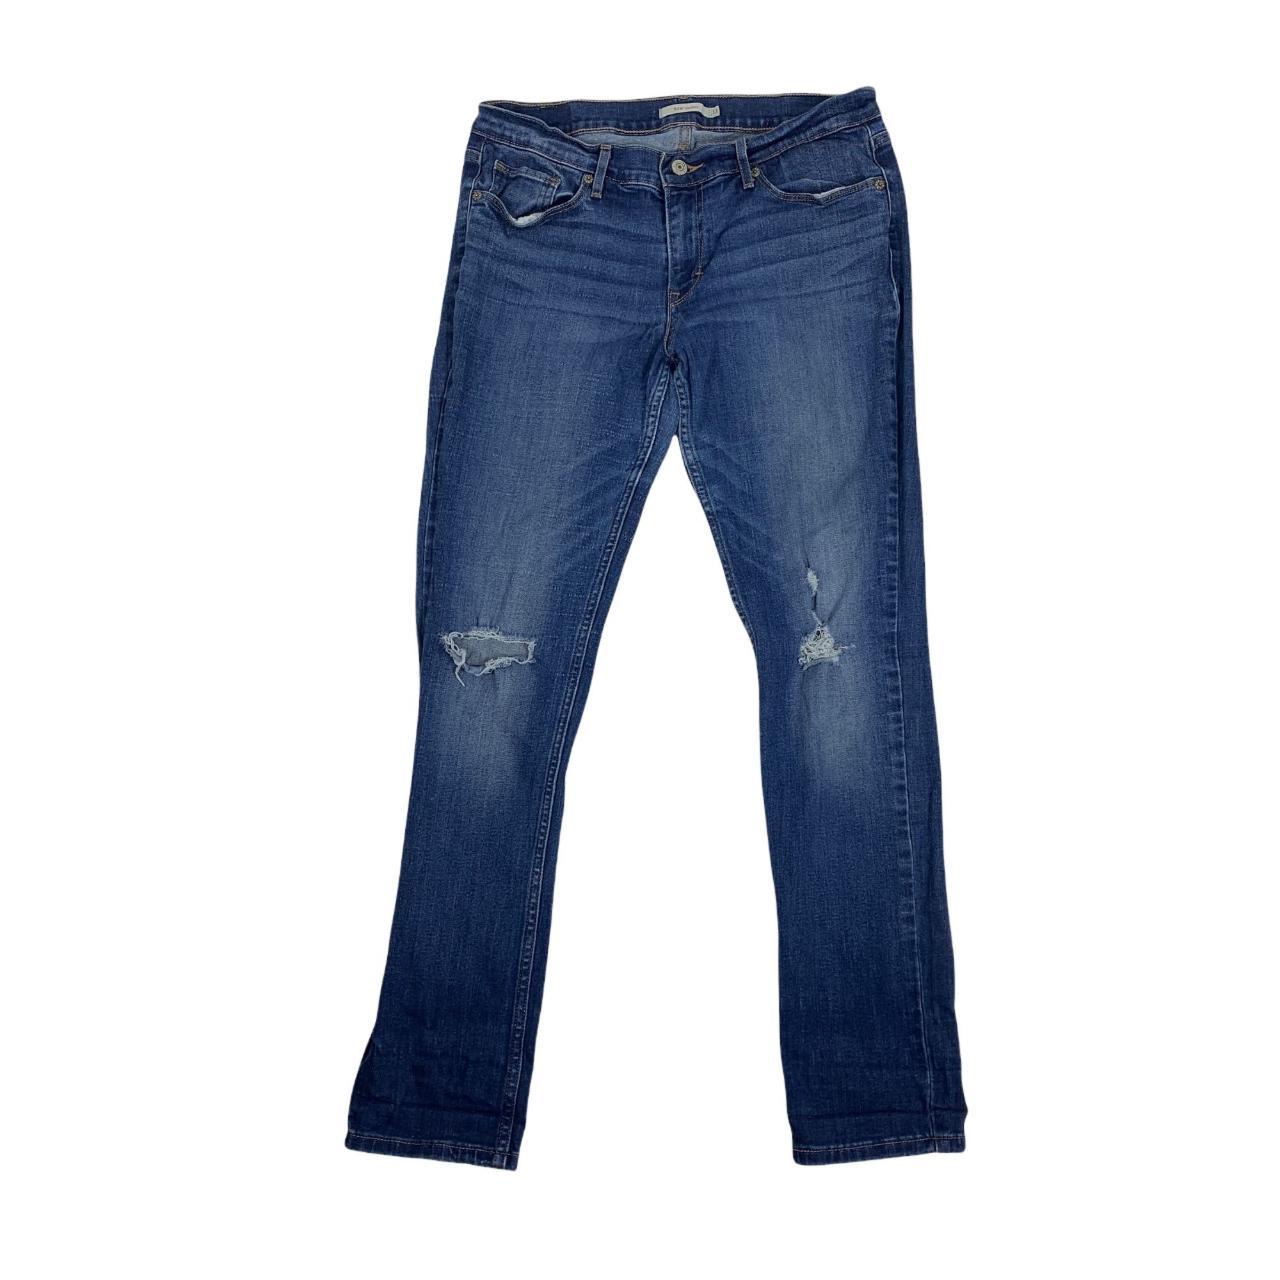 Levi's 524 - Skinny jeans - distress /holes in... - Depop